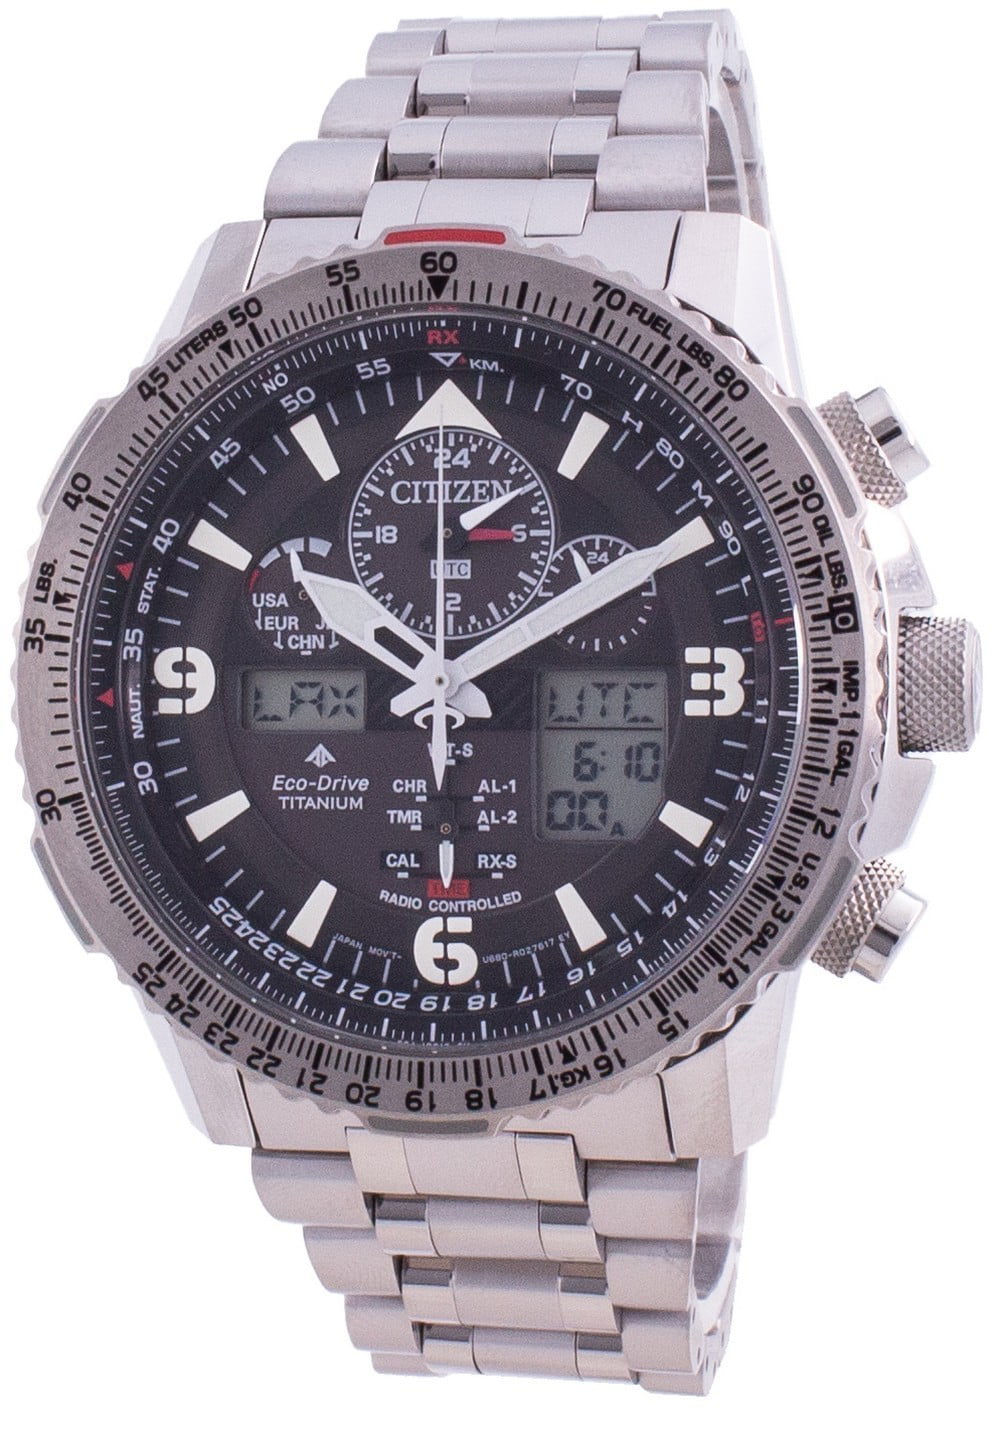 Men's Citizen Promaster Skyhawk Radio Controlled Titanium Watch JY8100-80E